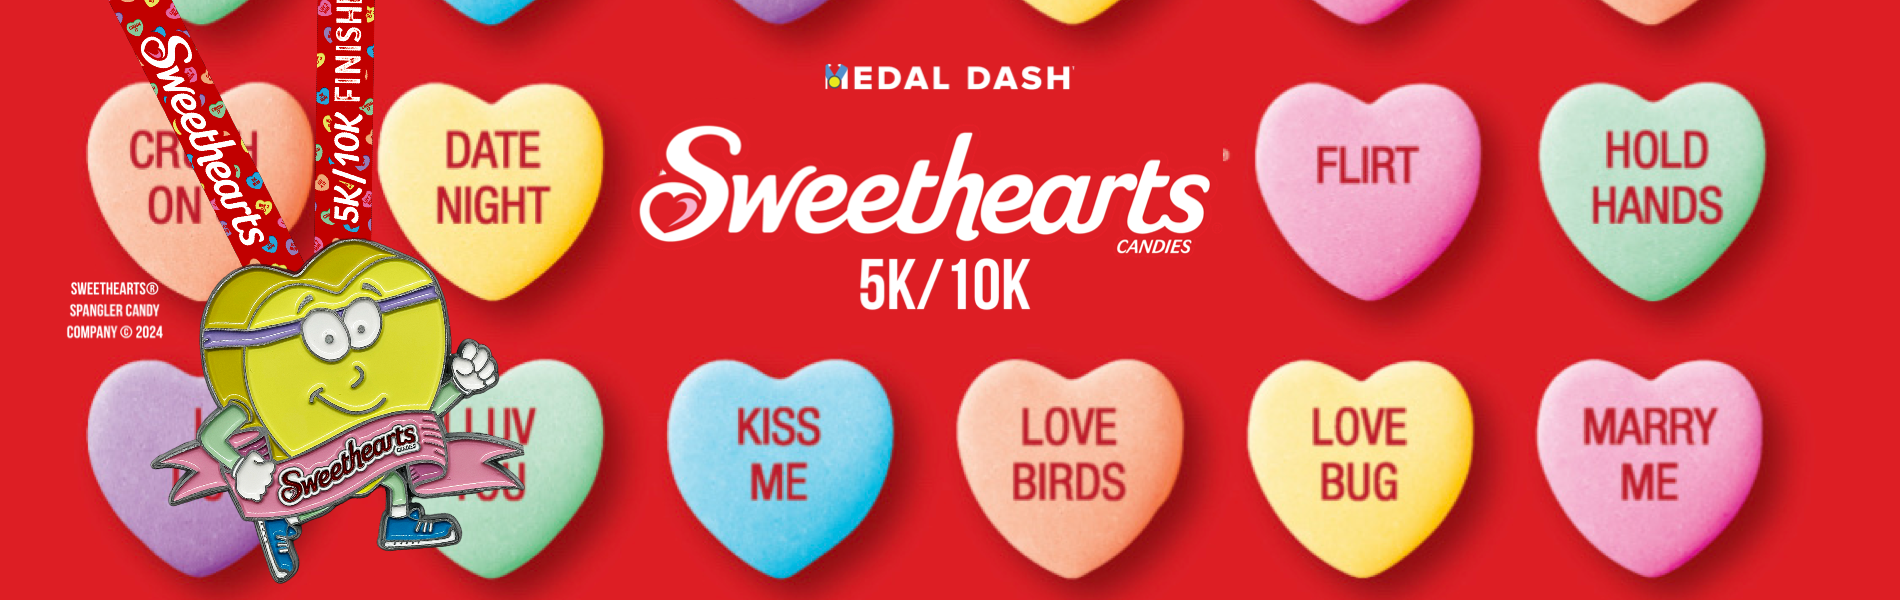 Sweethearts 5K 10k medal dash virtual run